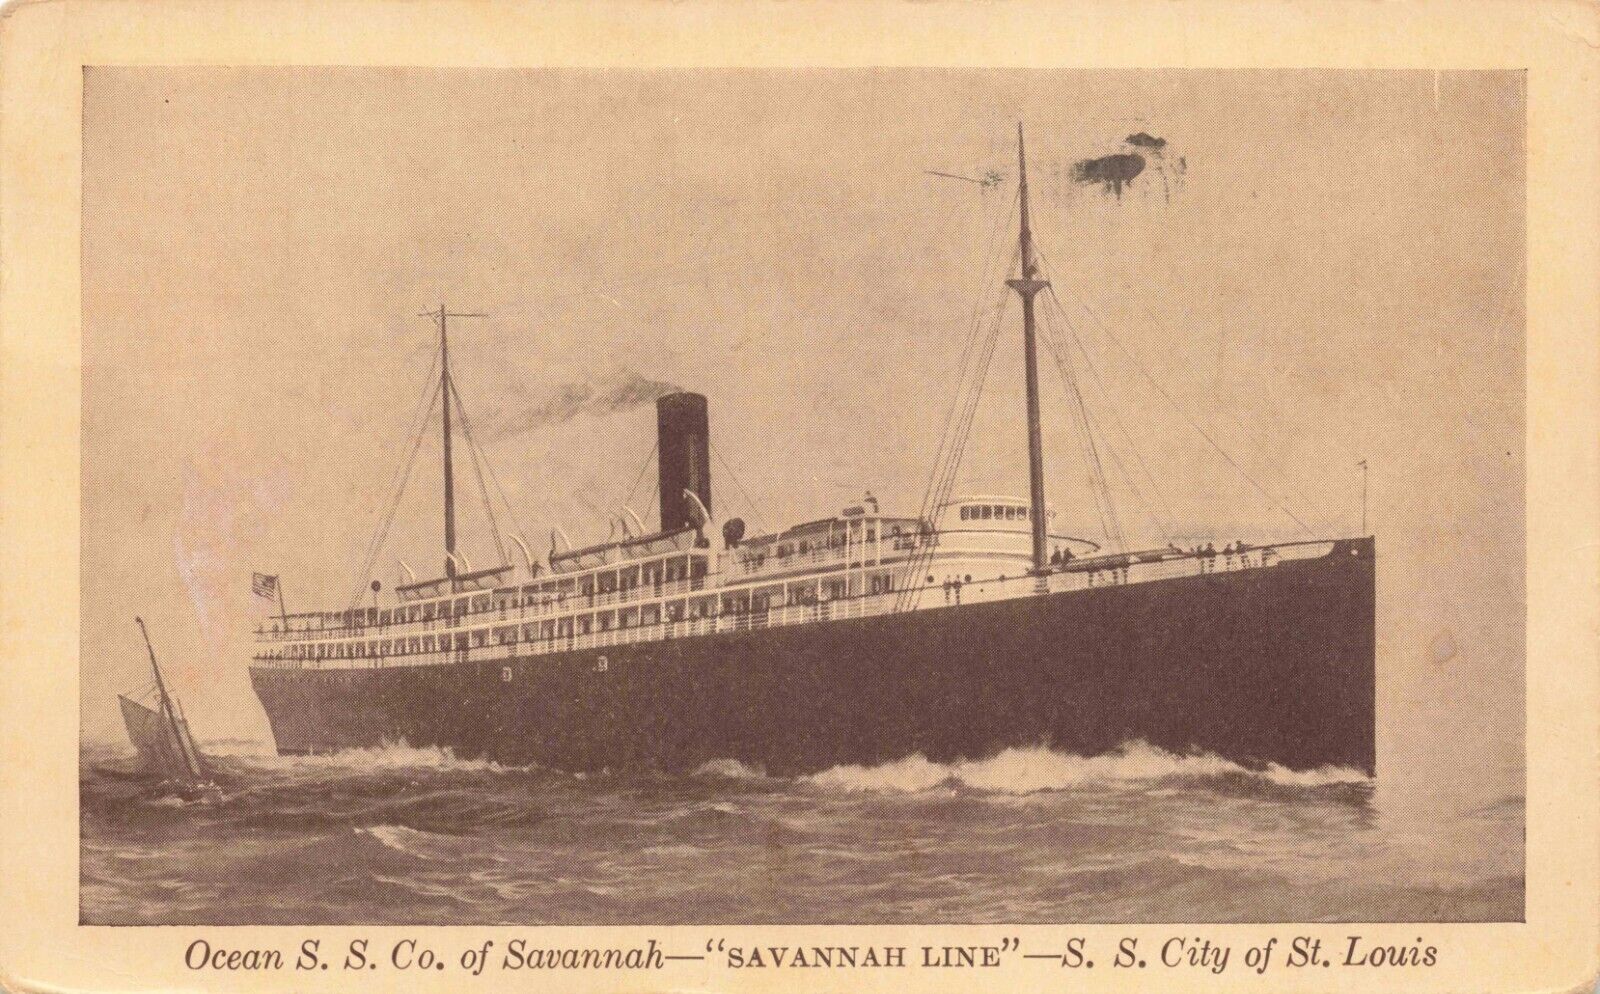 Savannah Line S.S. City of St. Louis - Ocean S.S. Co. of Savannah 1934 old ship